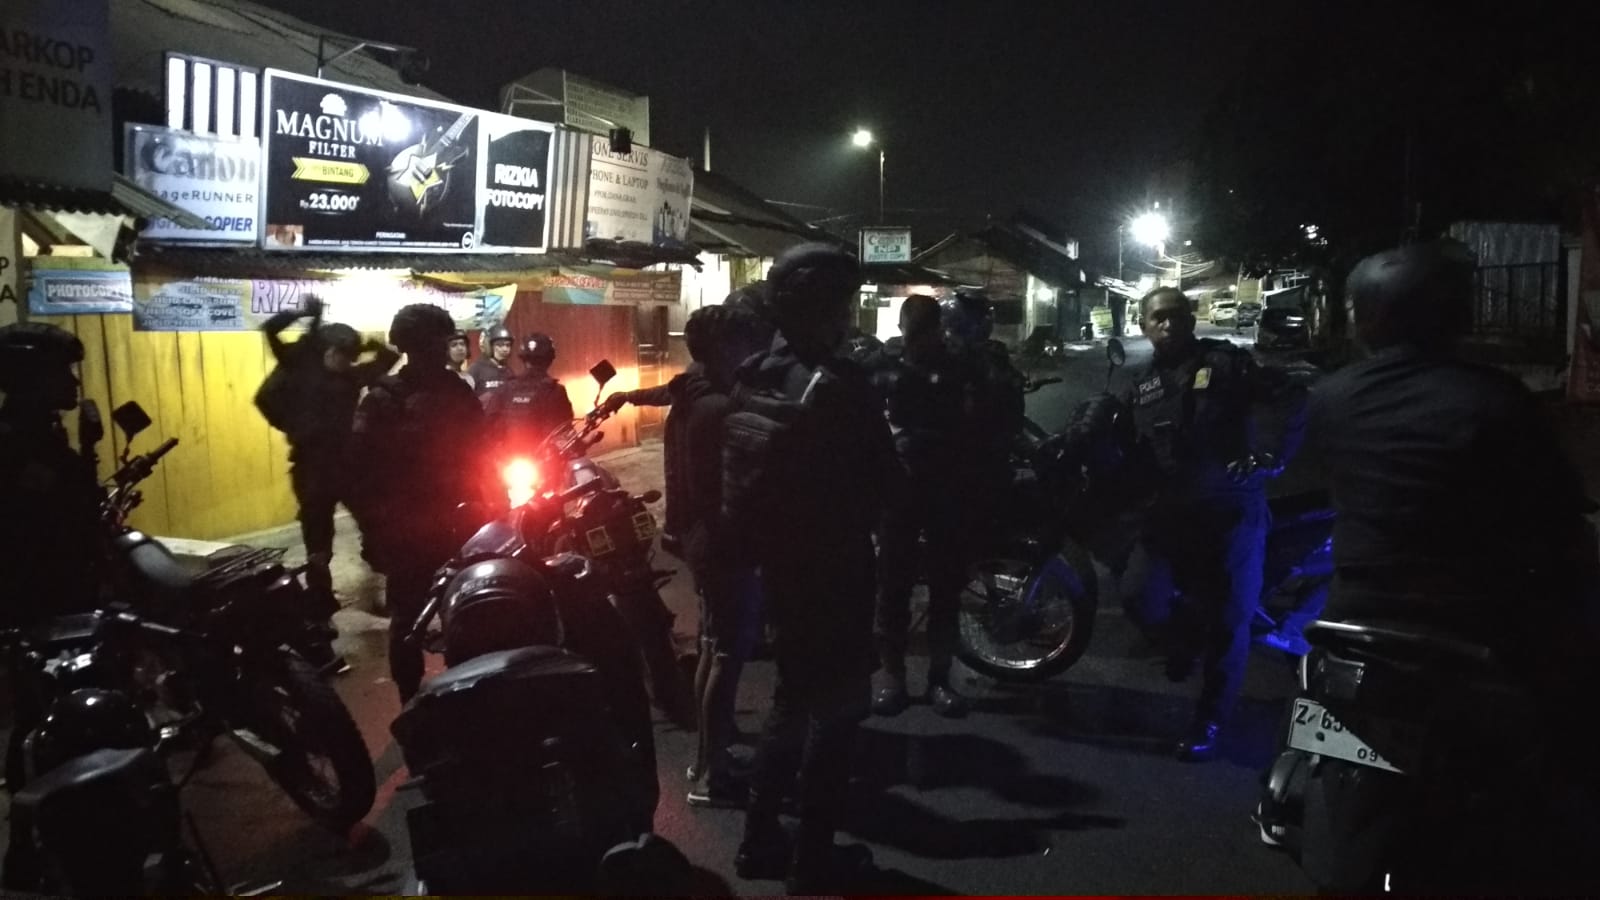 Patroli Jelang Pemilu Diintensifkan, Polisi di Kota Tasikmalaya Bubarkan Pesta Minuman Keras Para Remaja